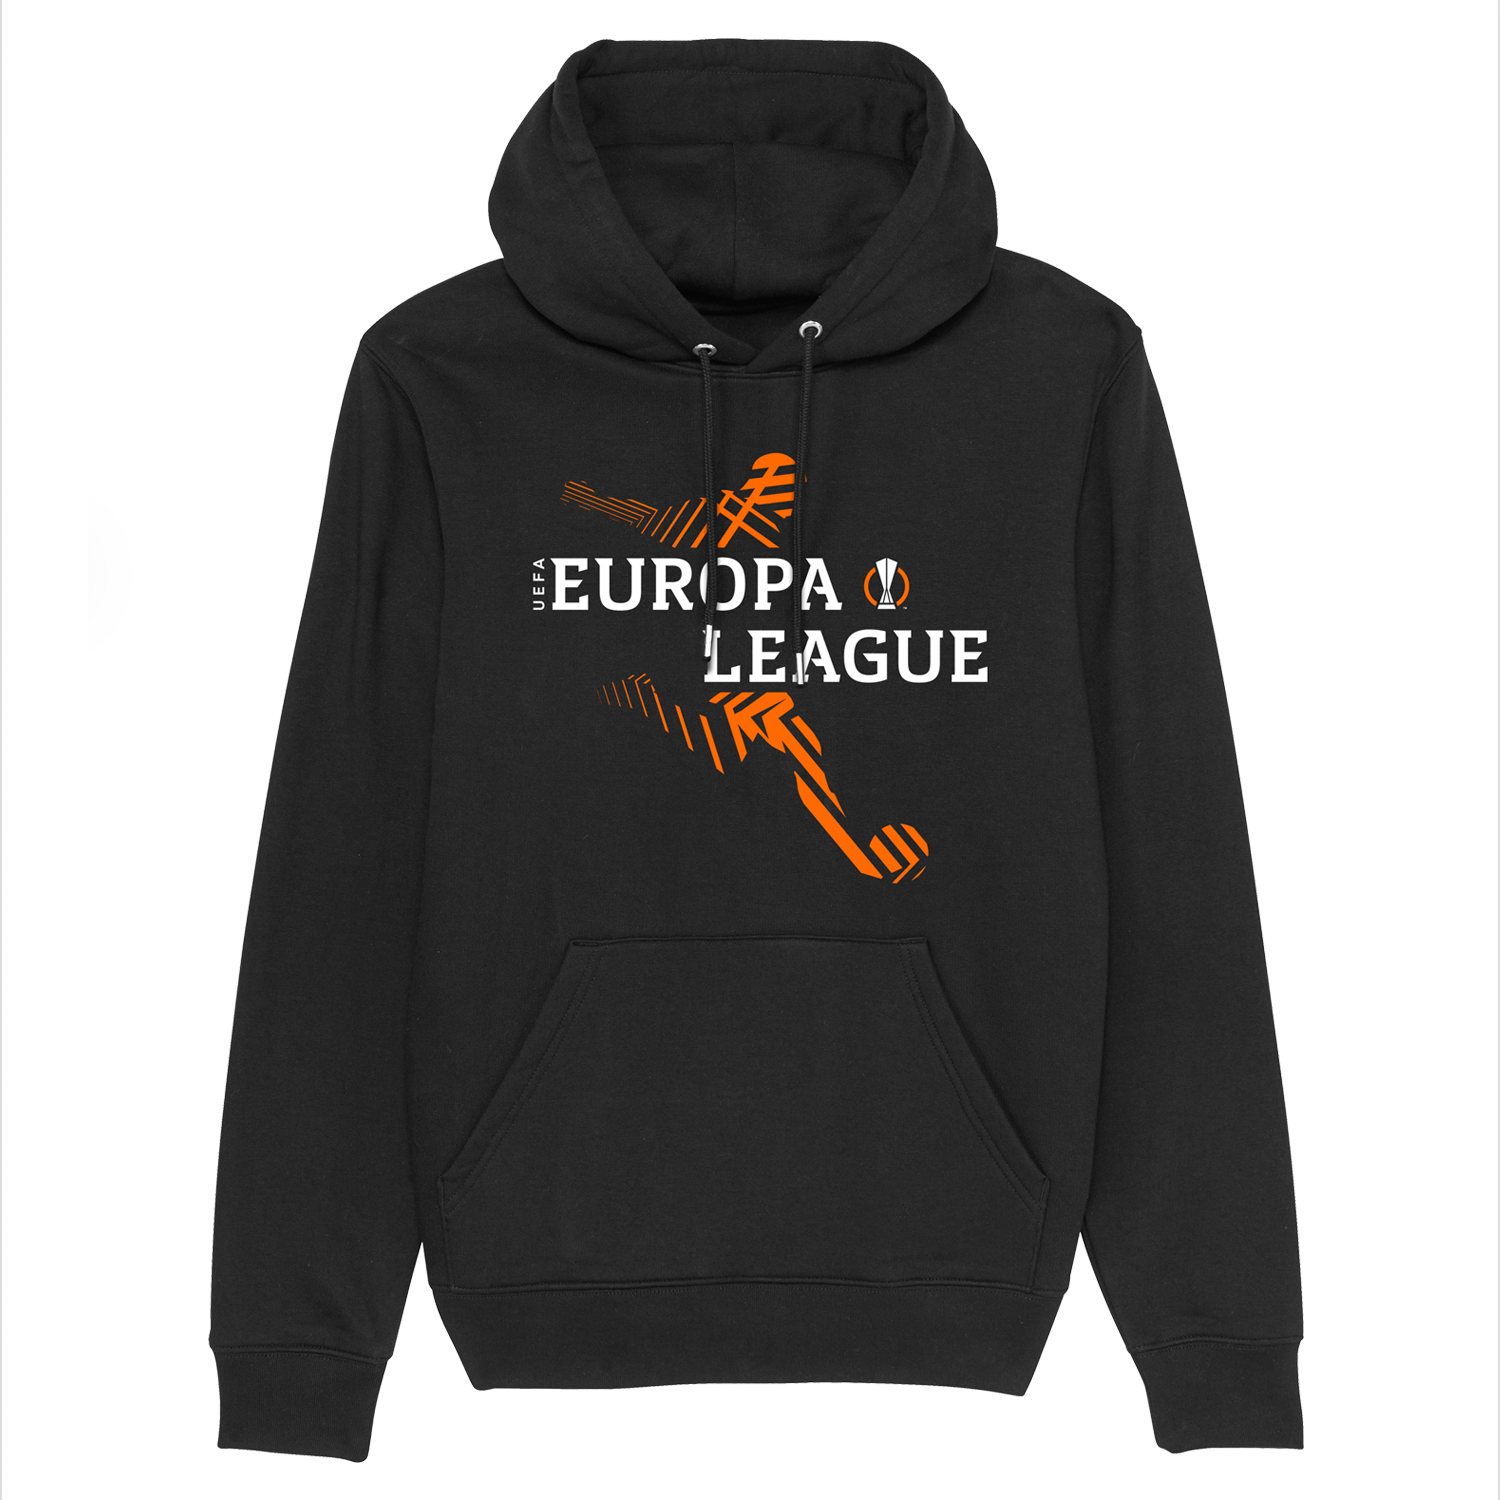 UEFA Europa League - Urban Player Black Hoodie UEFA Club Competitions Online Store